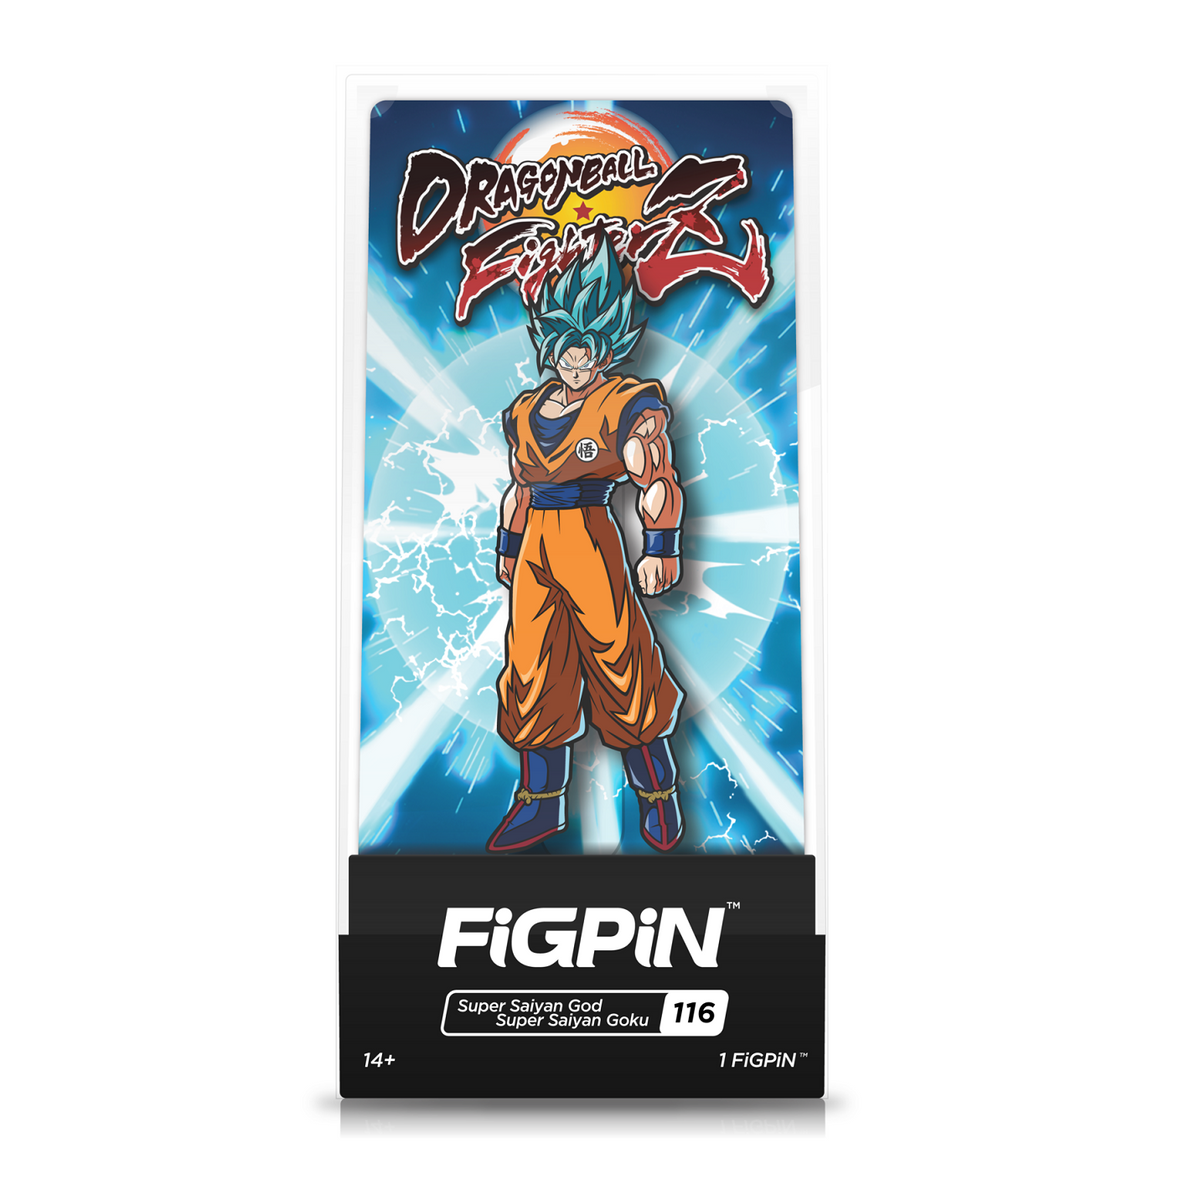 FiGPiN Classic: Dragon Ball Z Buu Saga - Super Saiyan Goku (1216